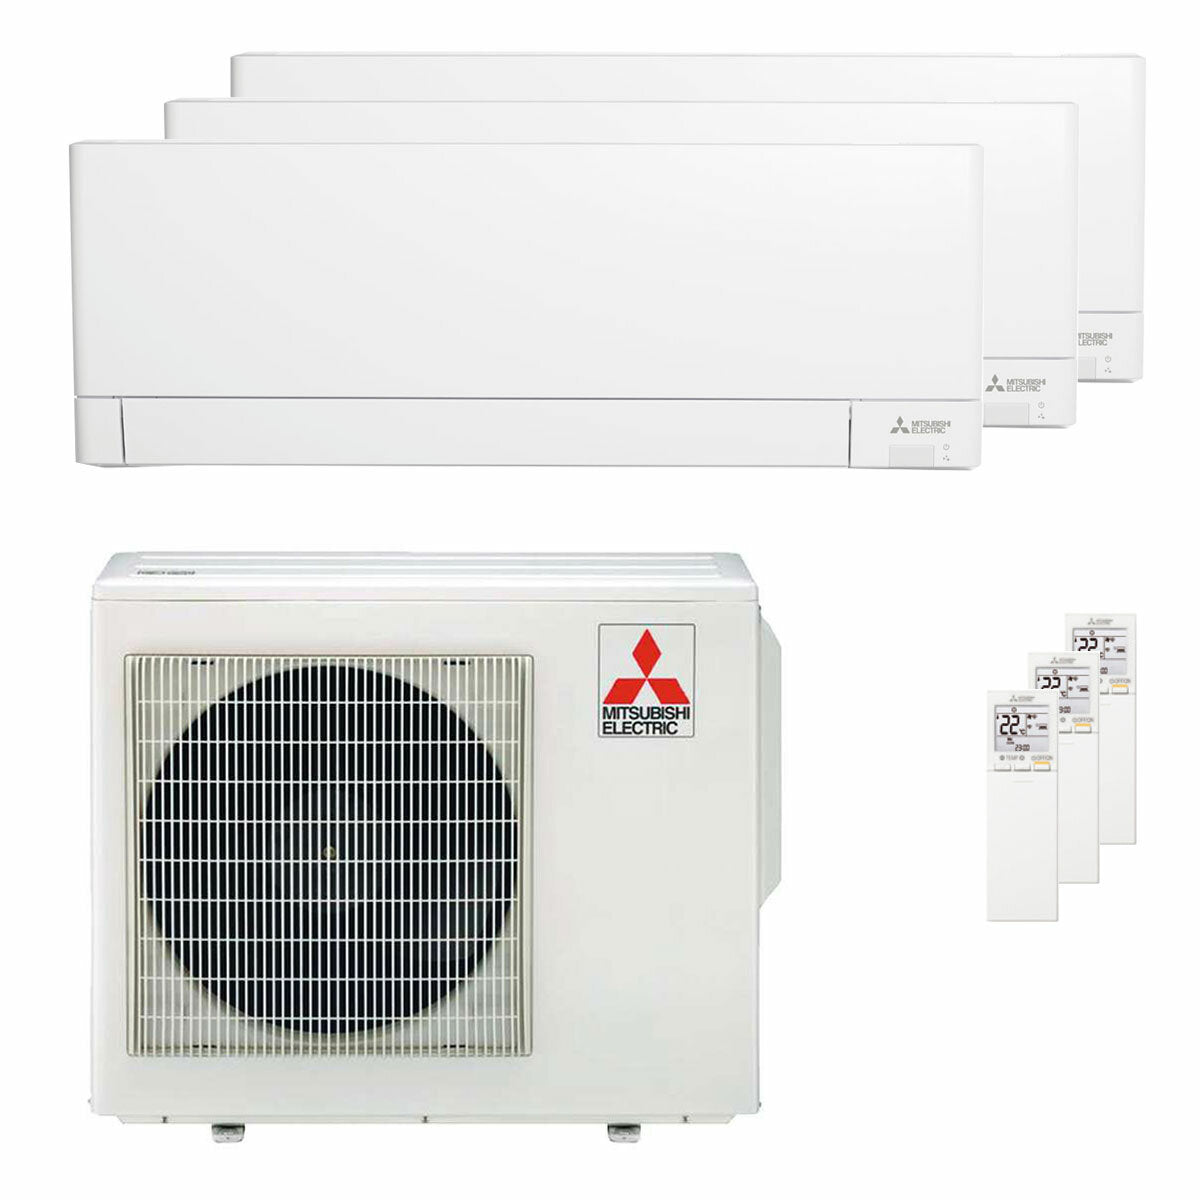 Mitsubishi Electric Air Conditioner AY Series trial split 9000+9000+9000 BTU inverter A++ outdoor unit wifi 5.4 kW